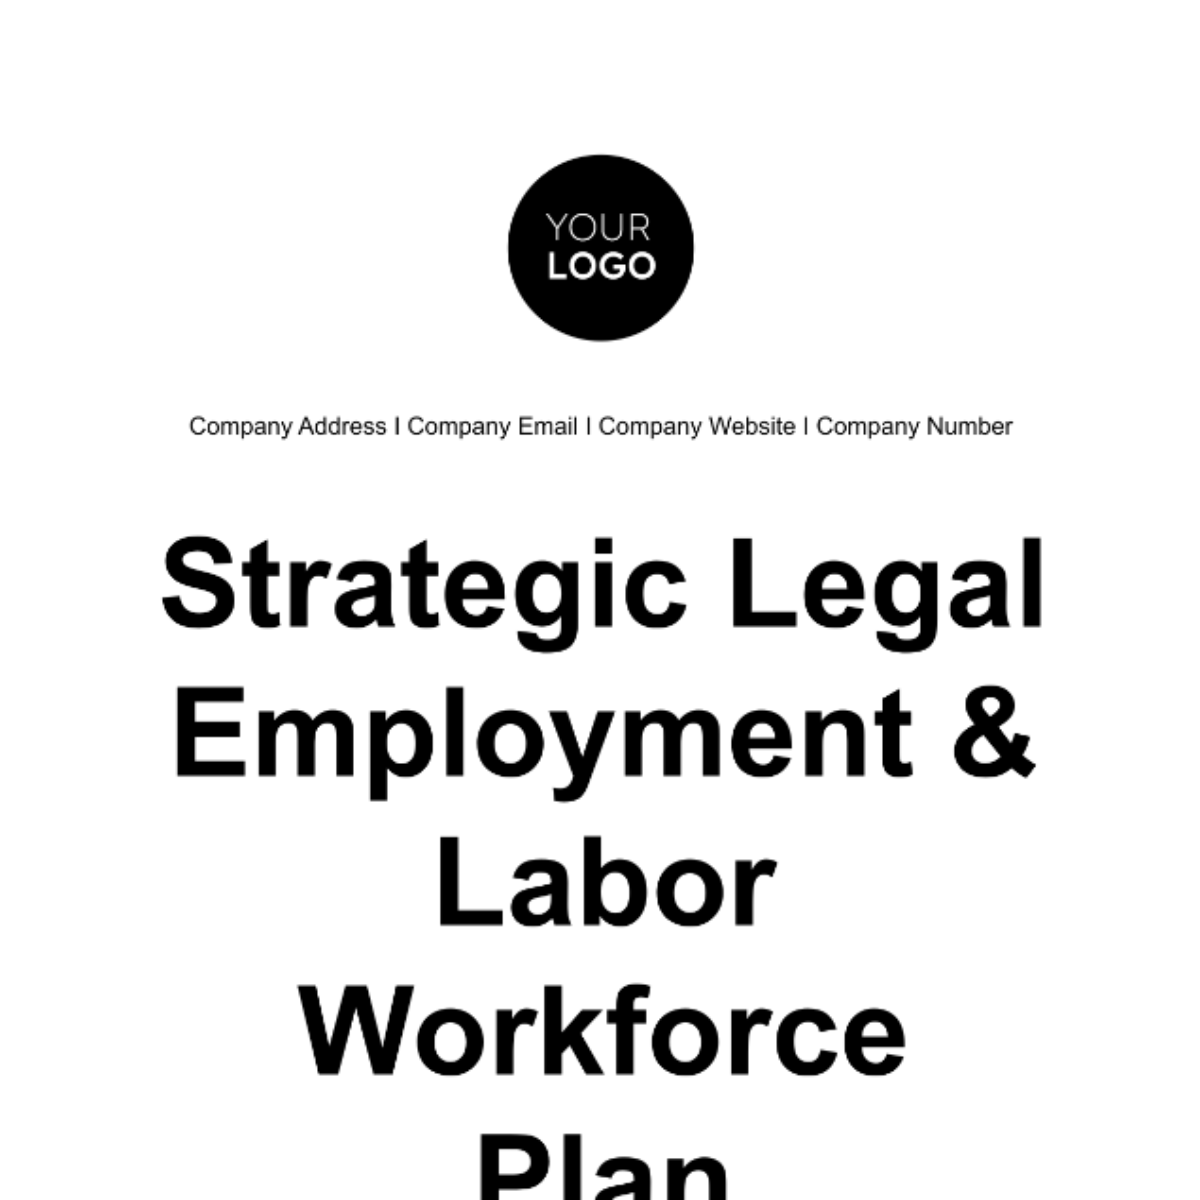 Strategic Legal Employment & Labor Workforce Plan Template